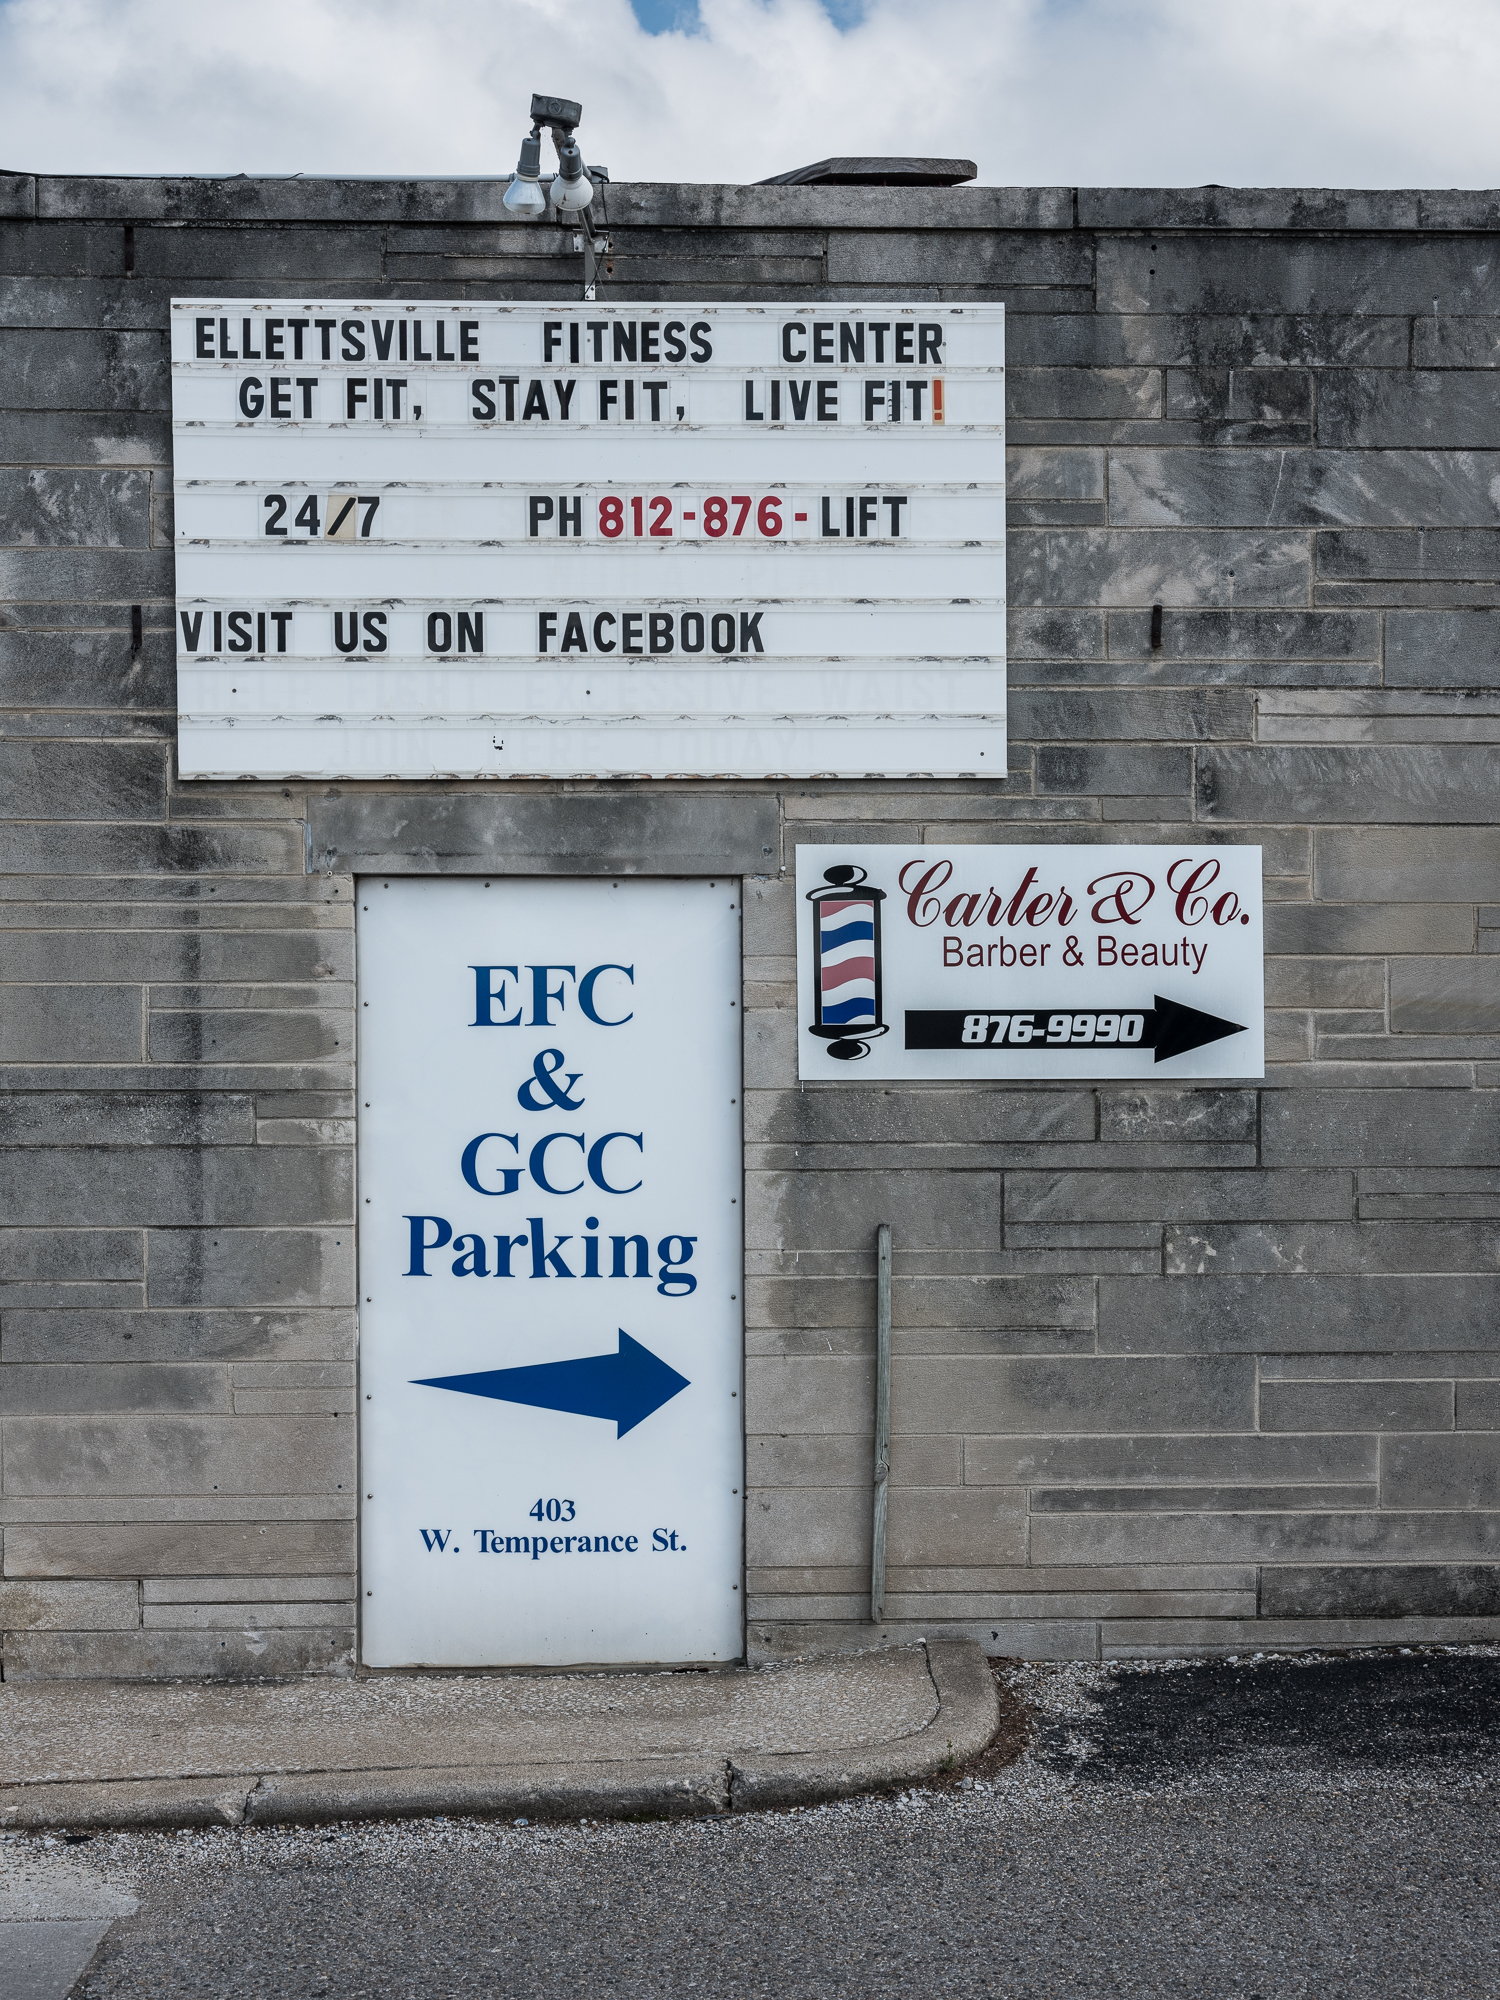 Fitness Center, Ellettsville, Indiana, 2018